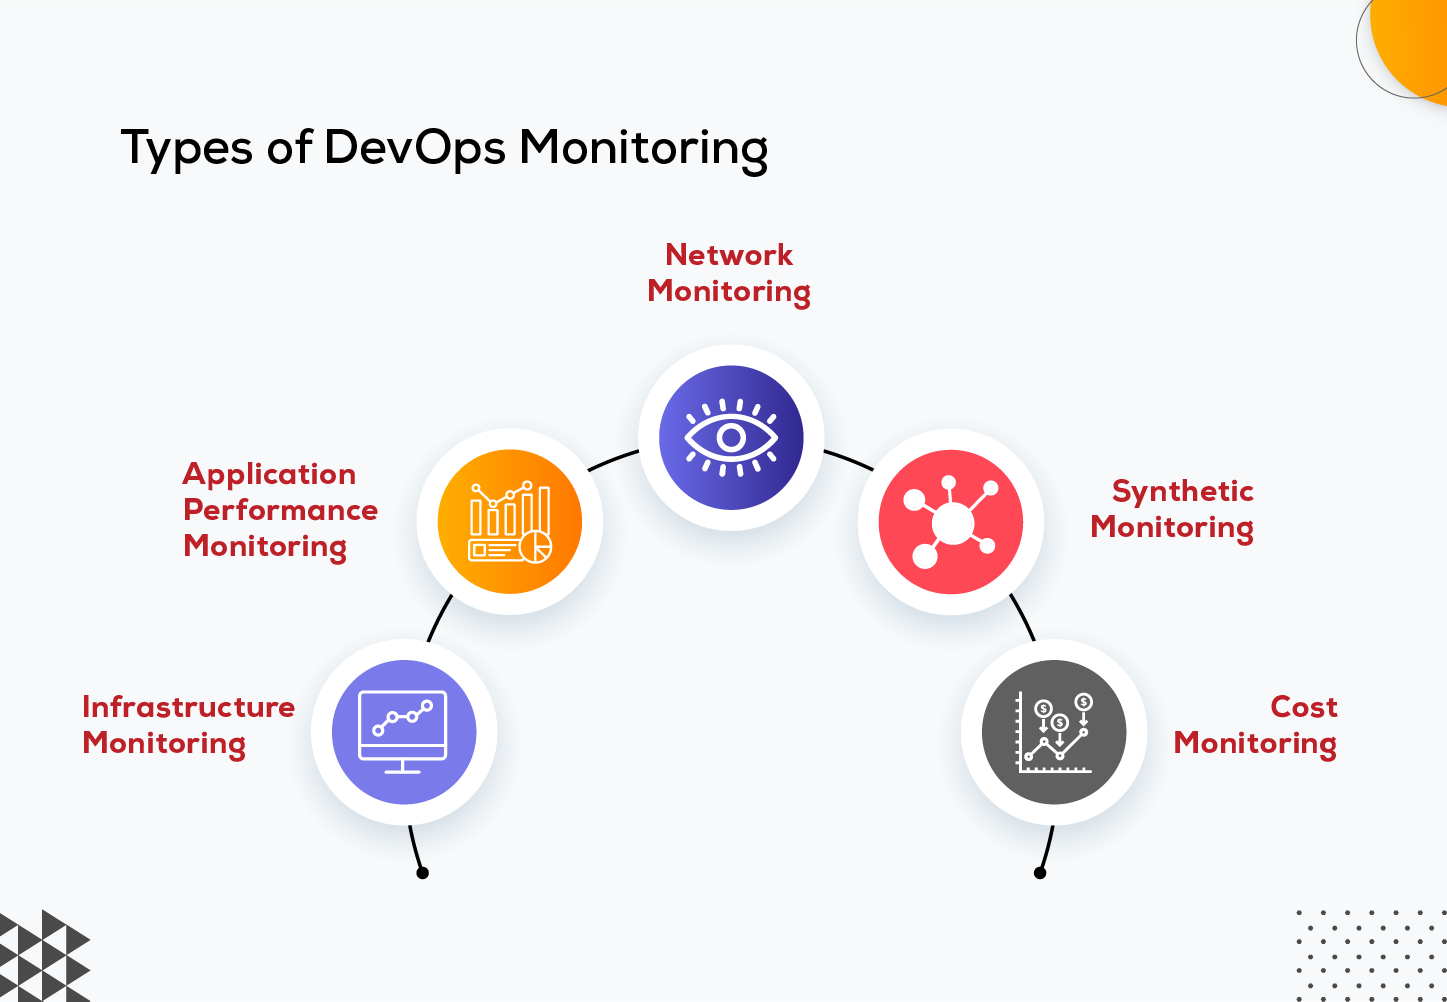 Types of DevOps monitoring